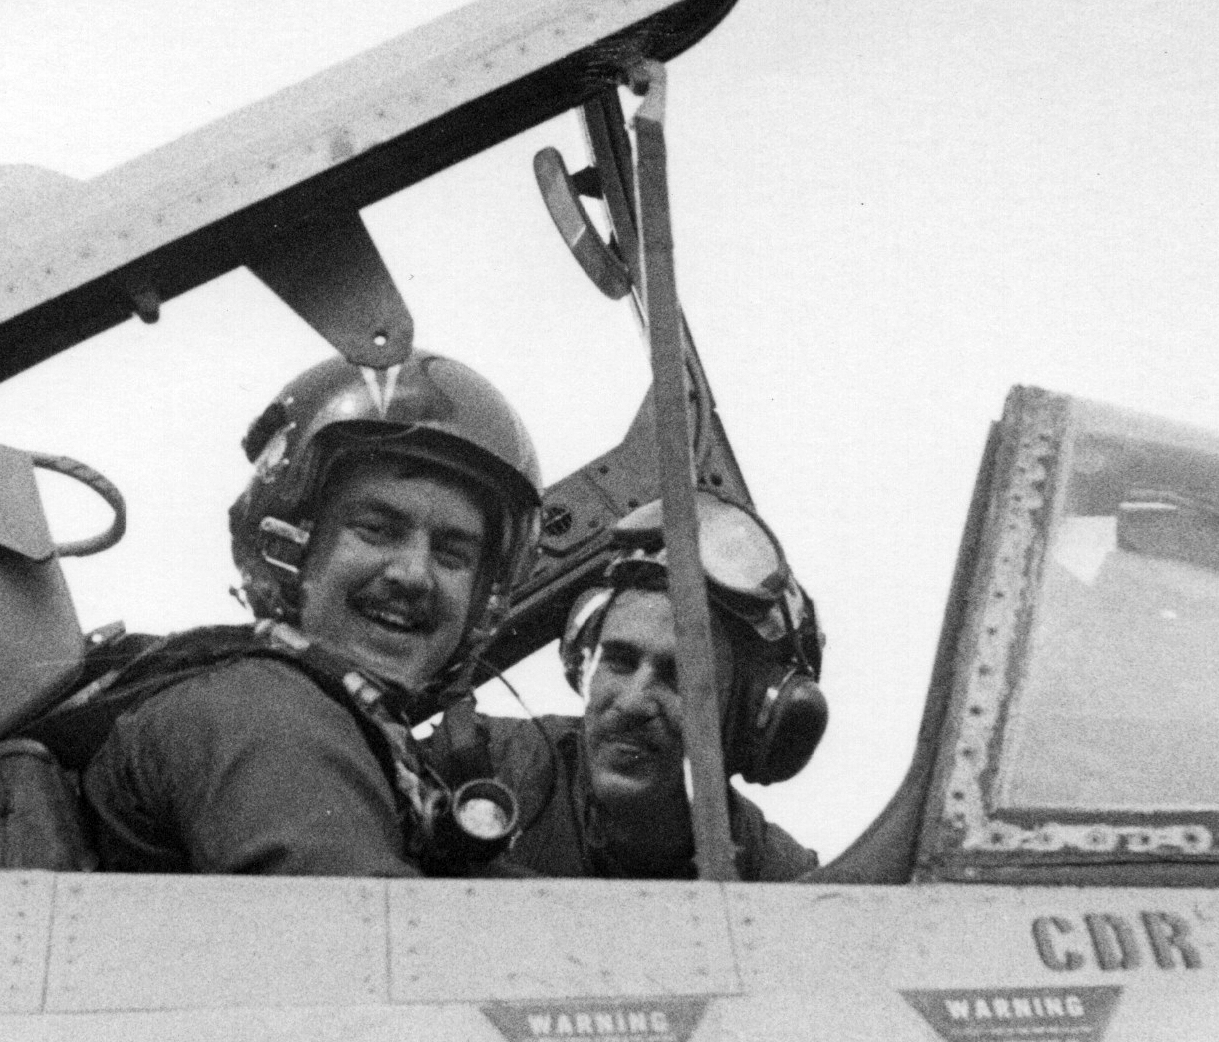 Skip Harvey piloting in Vietnam